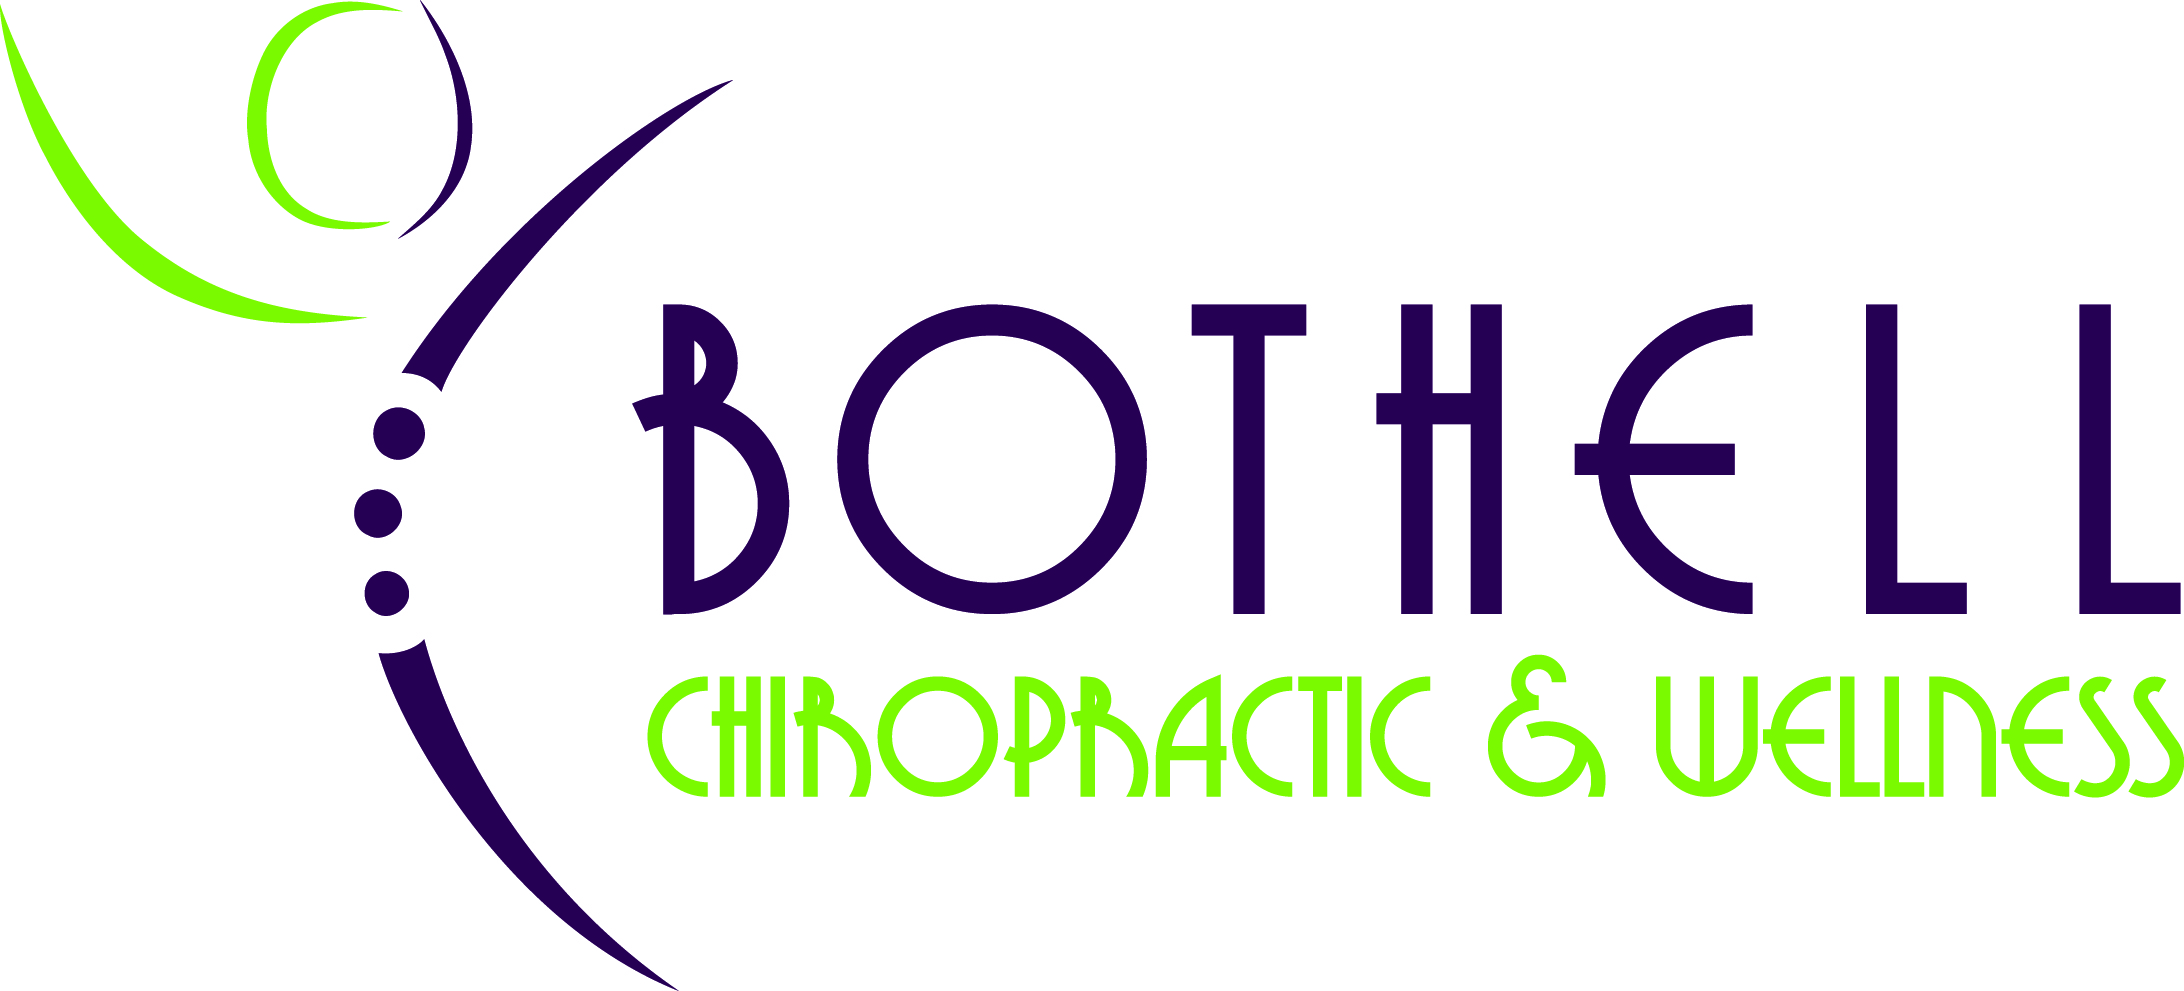 Bothell Chiropractic & Wellness logo